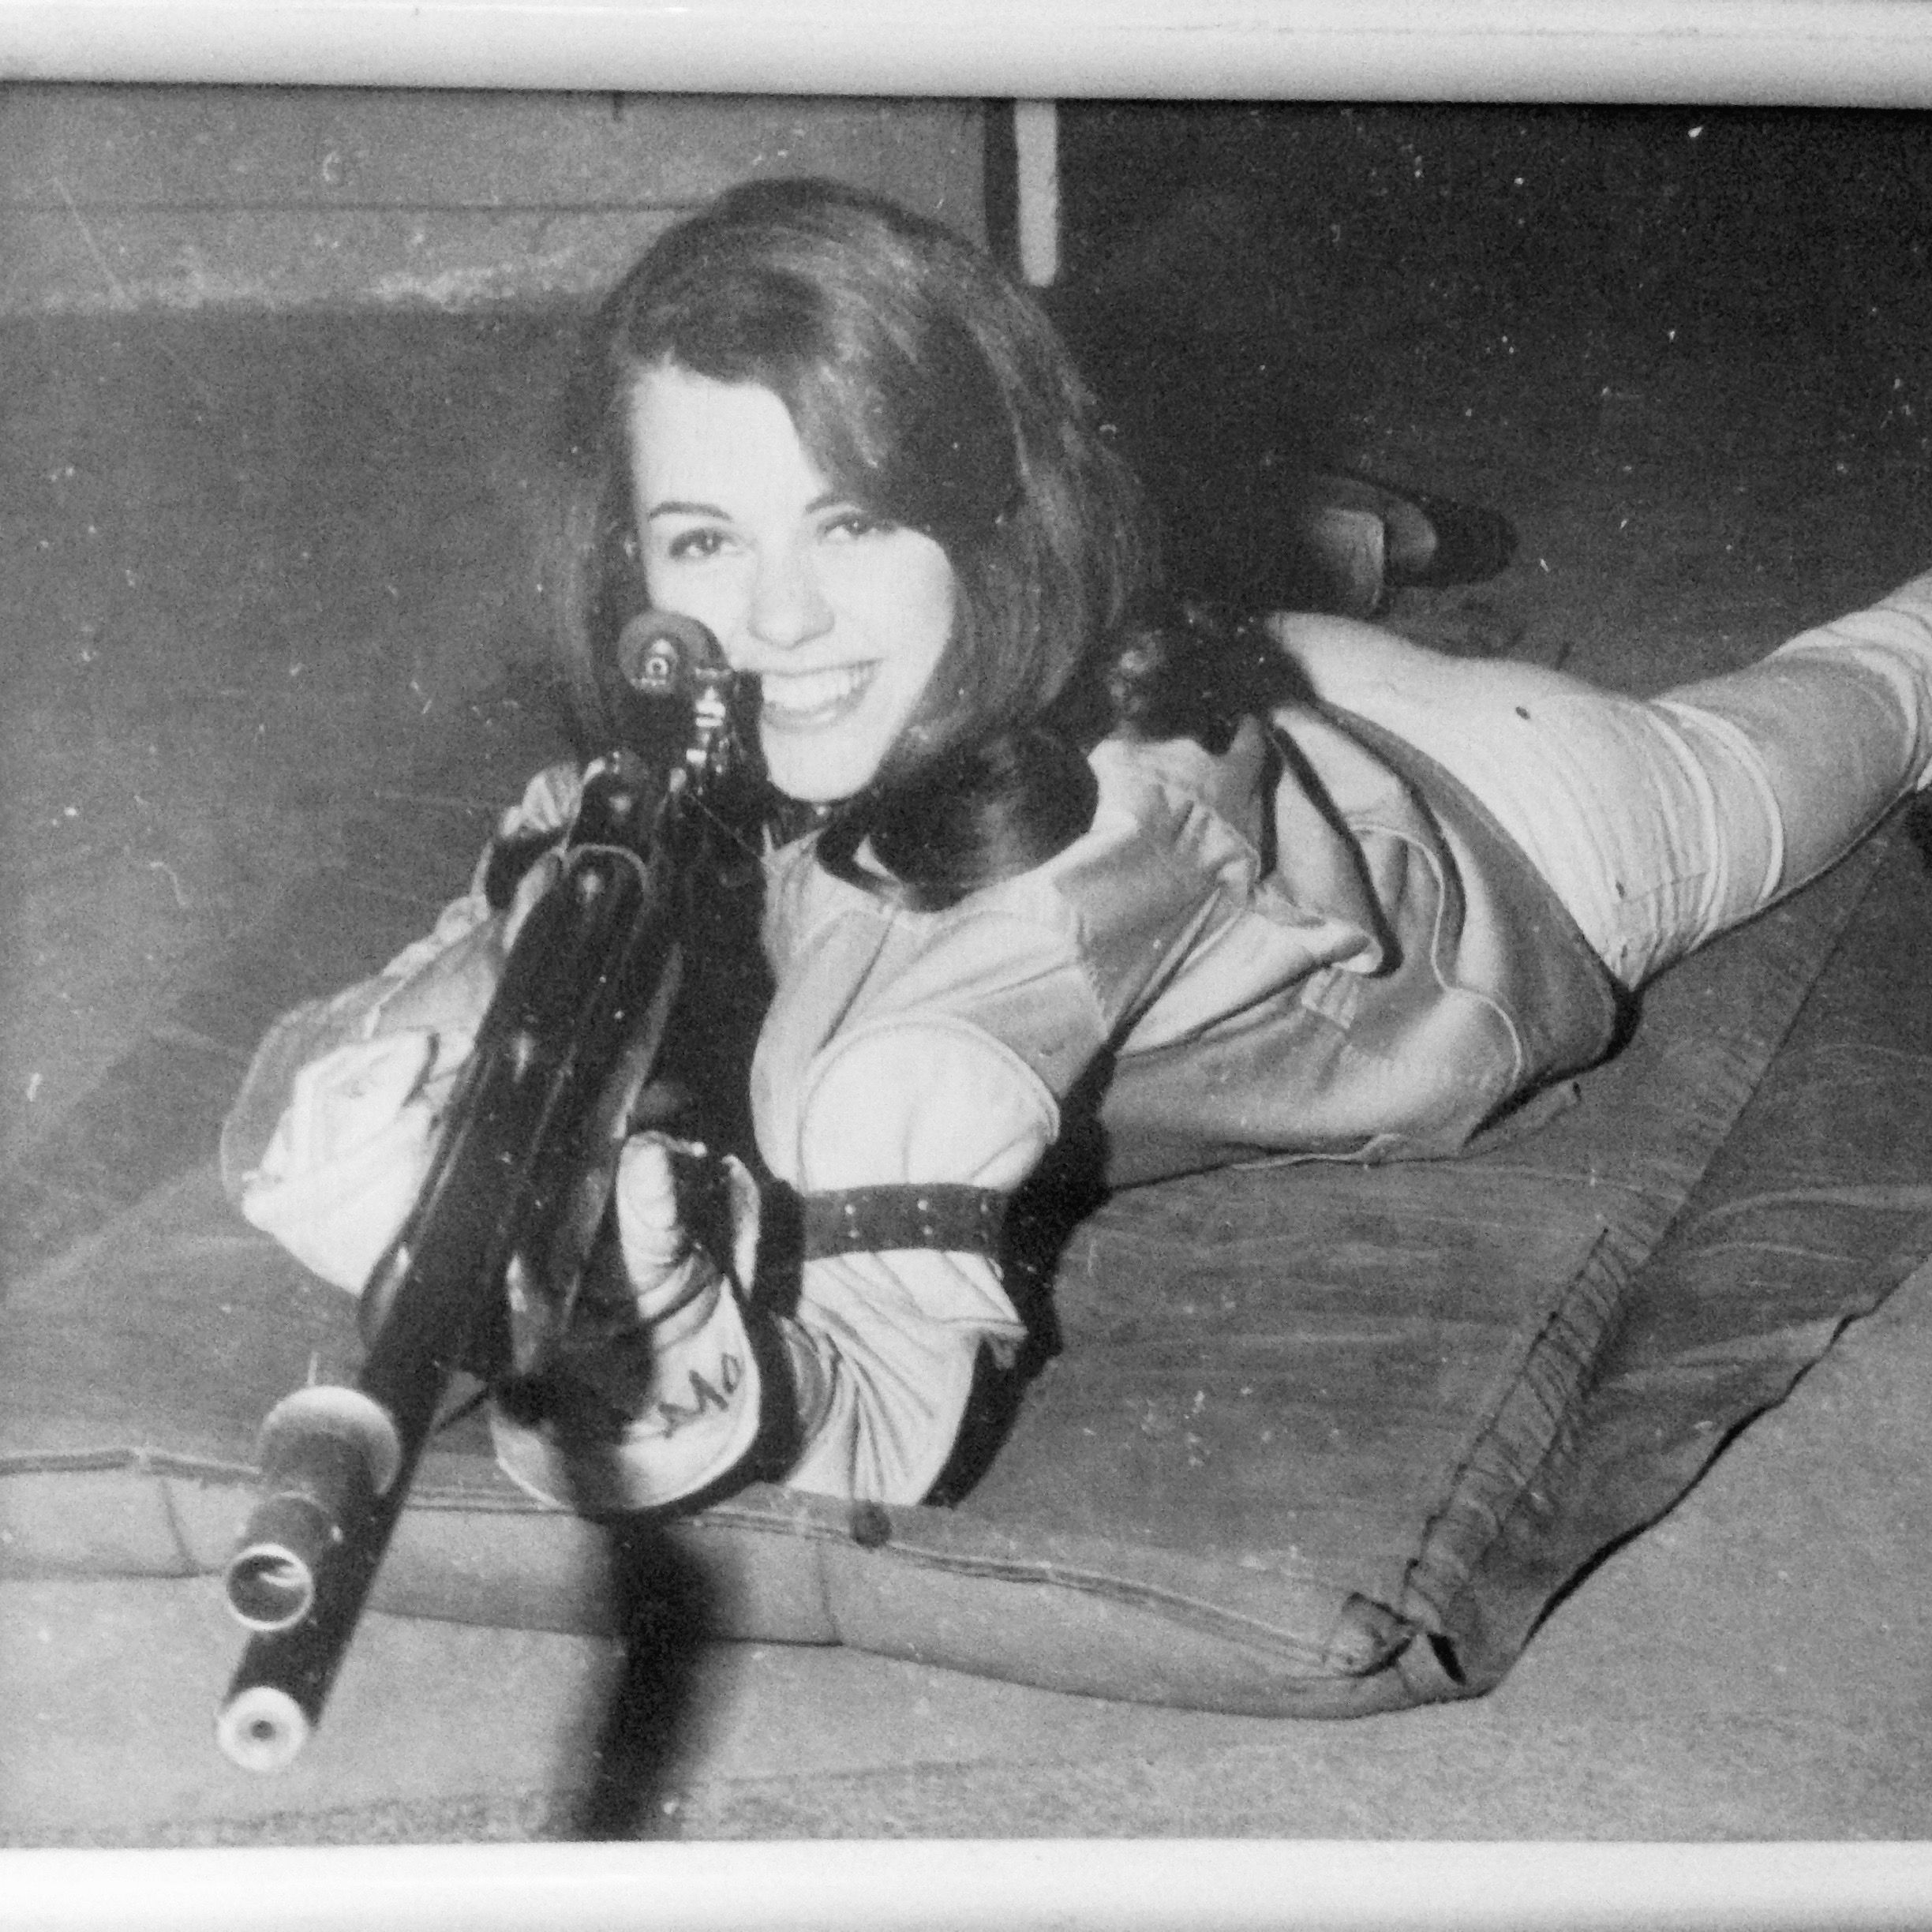 University of Missouri Rifle team girl, 1968.